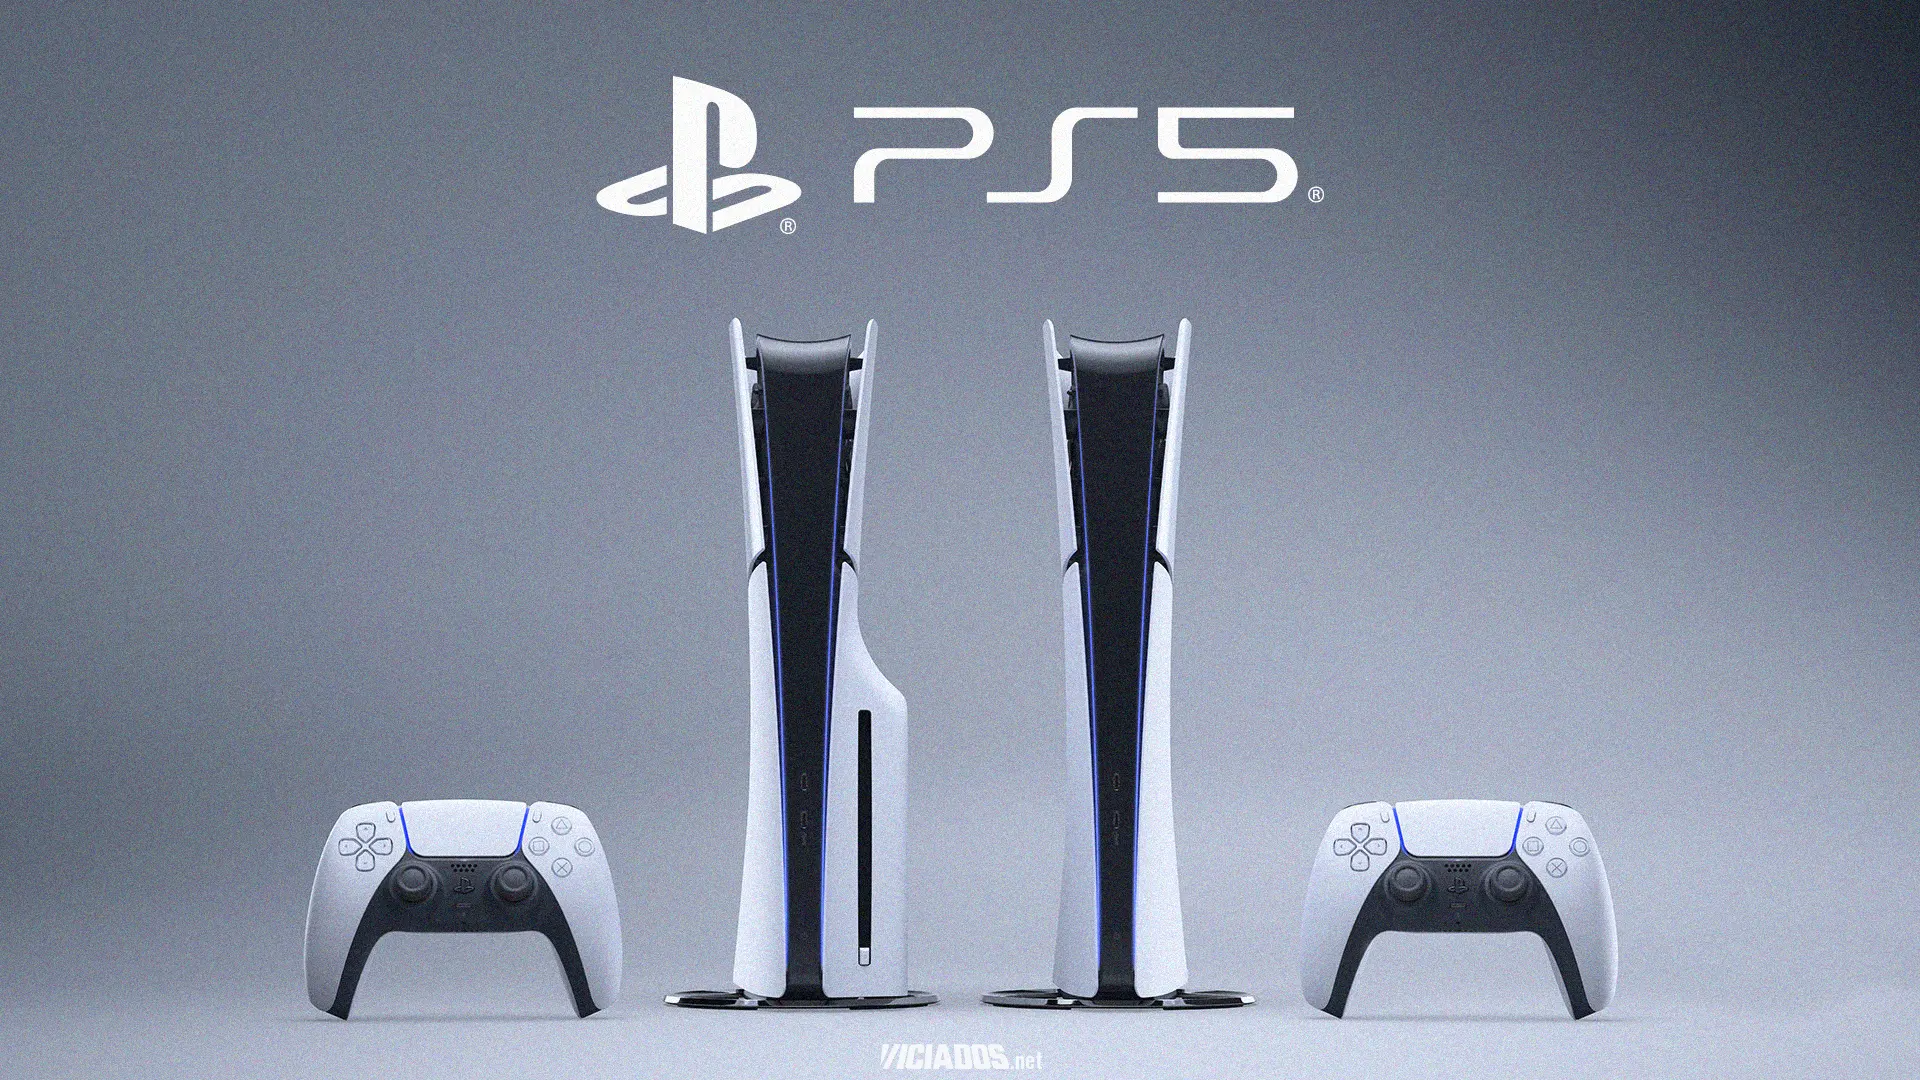 PS5 Slim | Console da Sony pode receber novo bundle nesta data no Brasil 2024 Portal Viciados